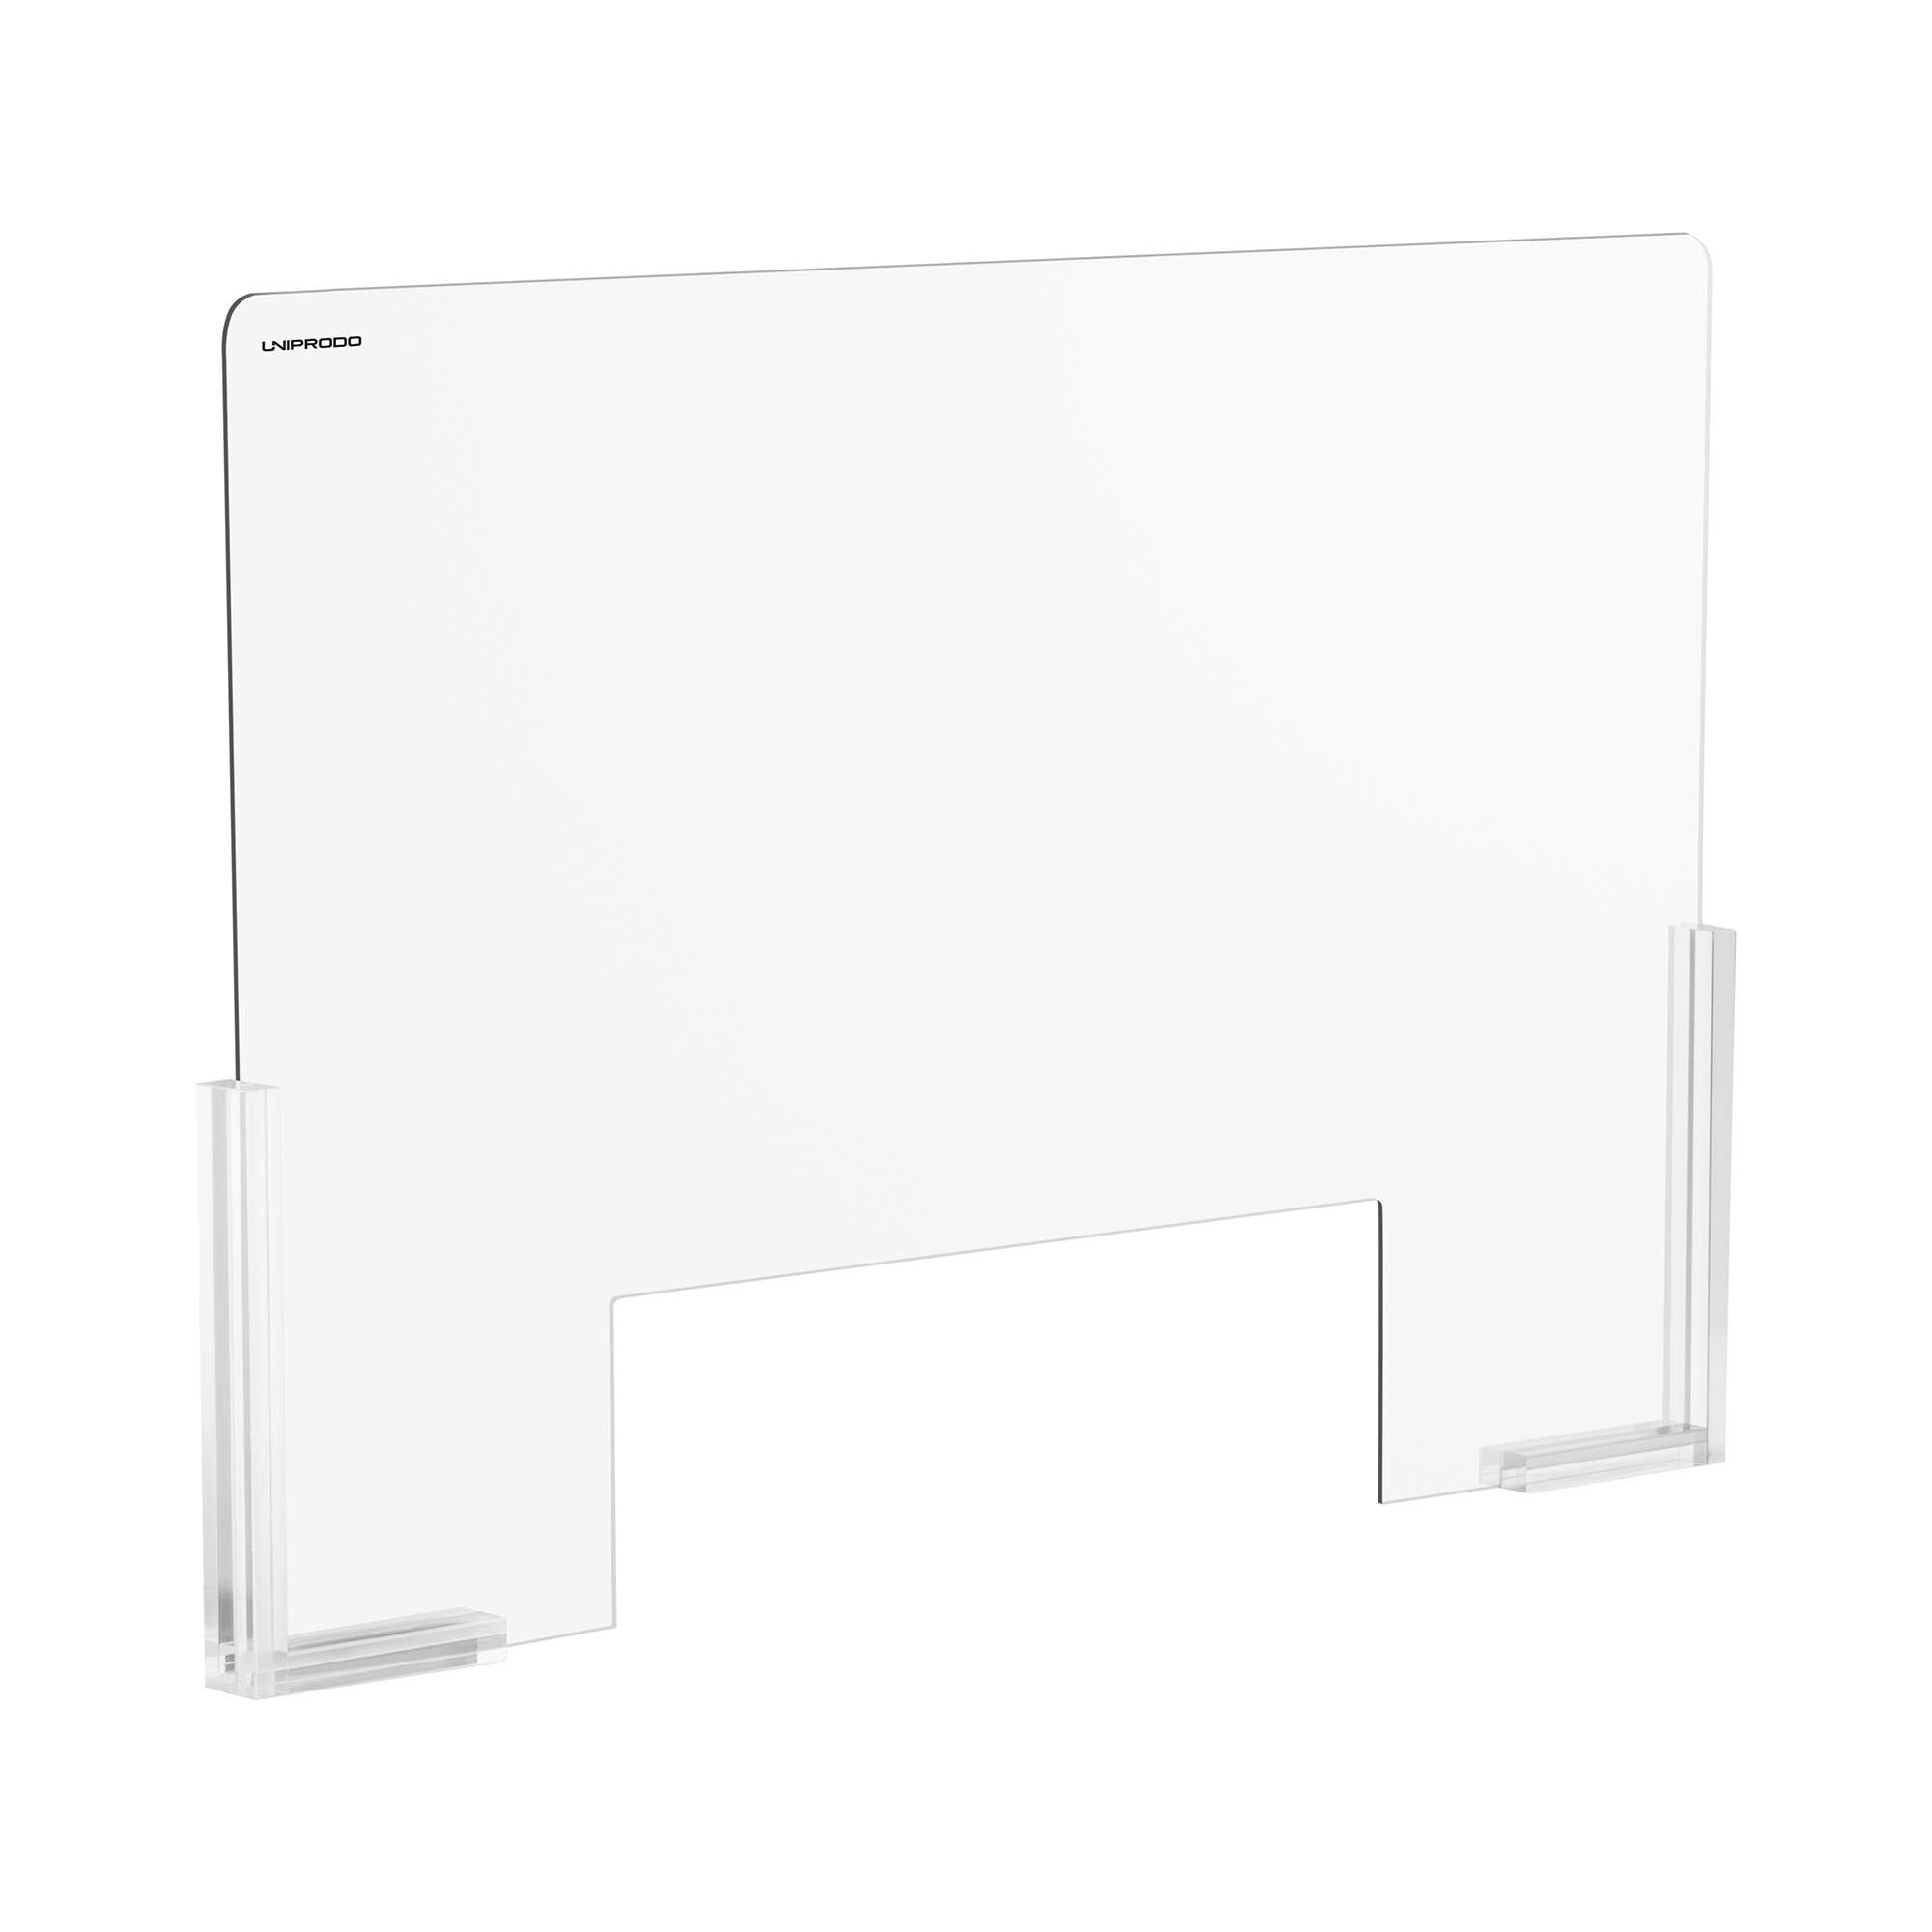 Uniprodo Ochranná přepážka - 95 x 65 cm - akrylátové sklo - výdejové okénko 38 x 25 cm UNI-PPG03